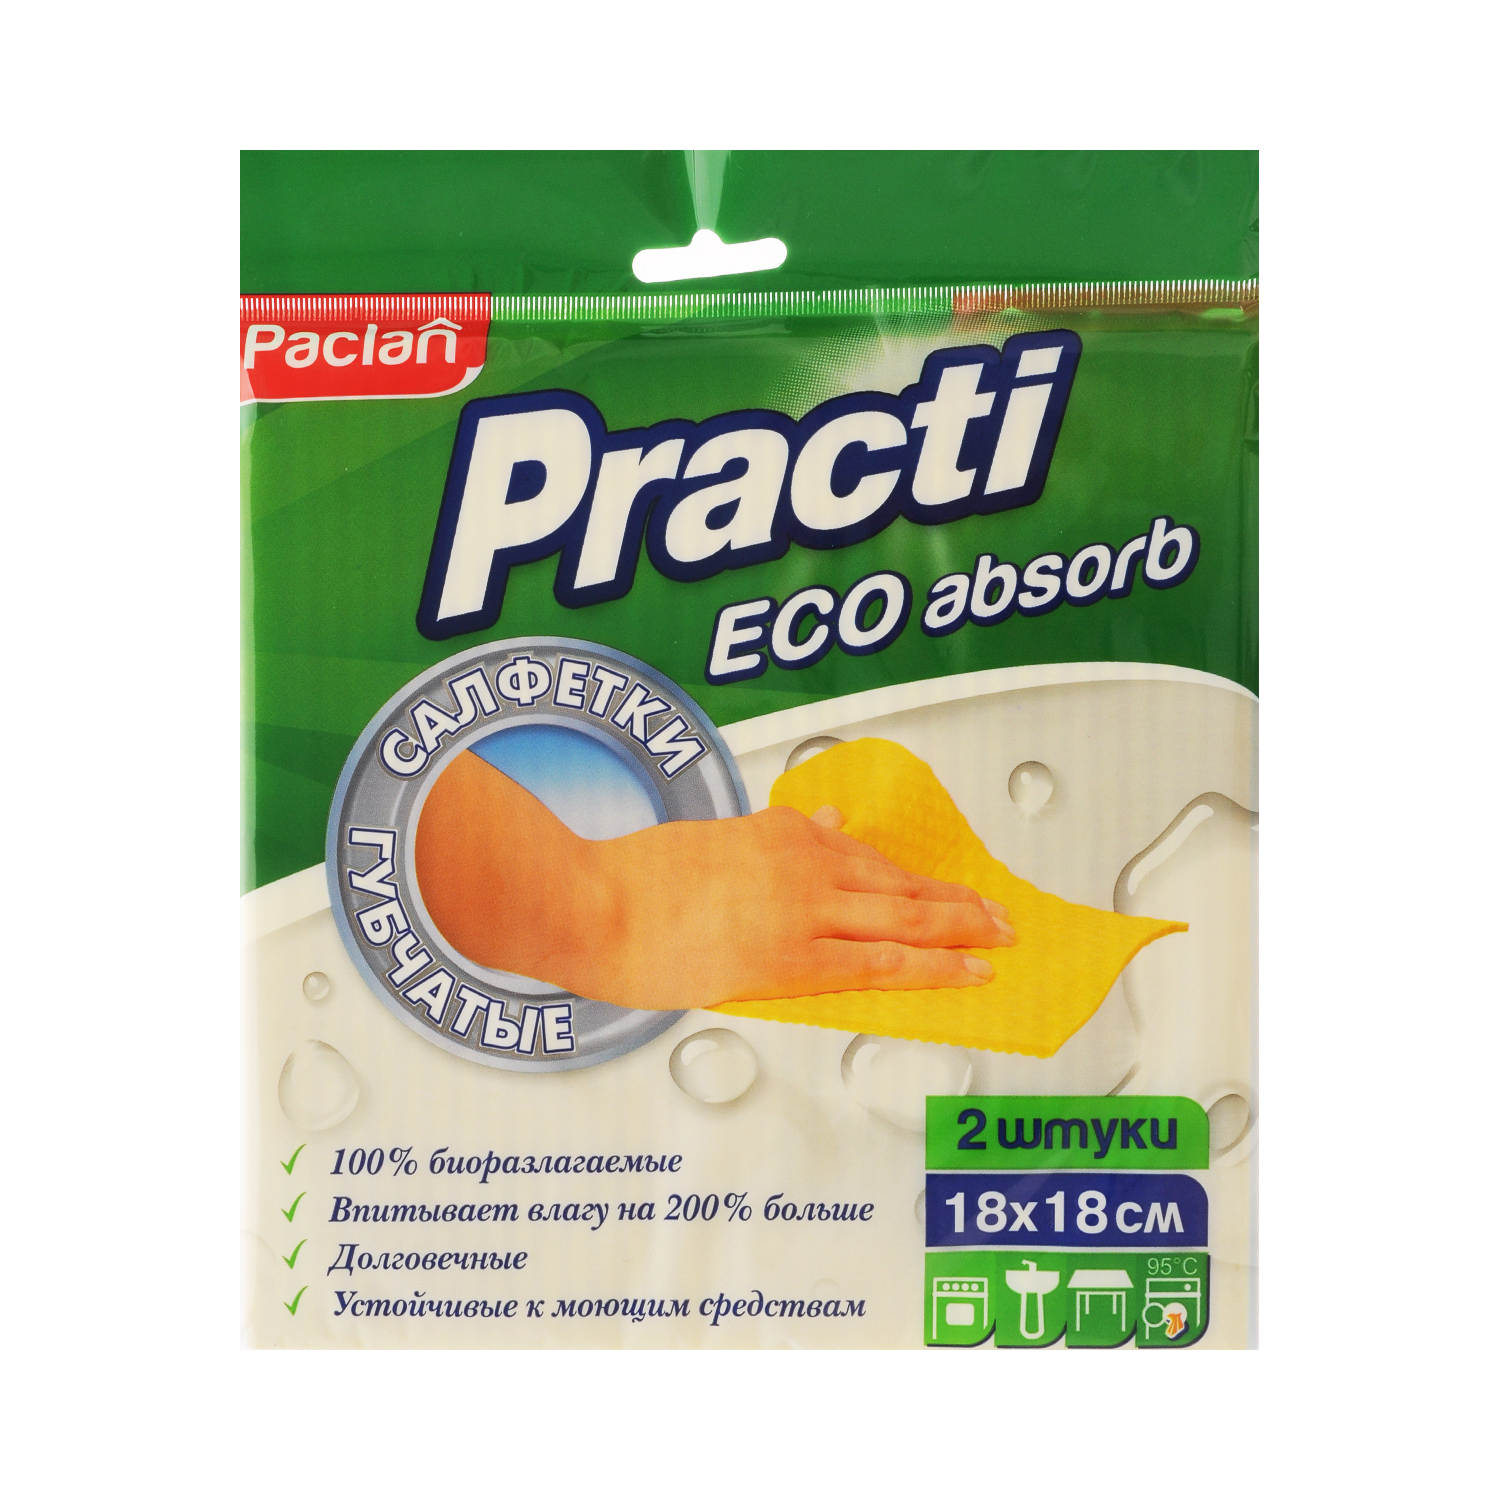 Набор салфеток для уборки Paclan Practi губчатые 2 шт целлюлозные губчатые салфетки paclan